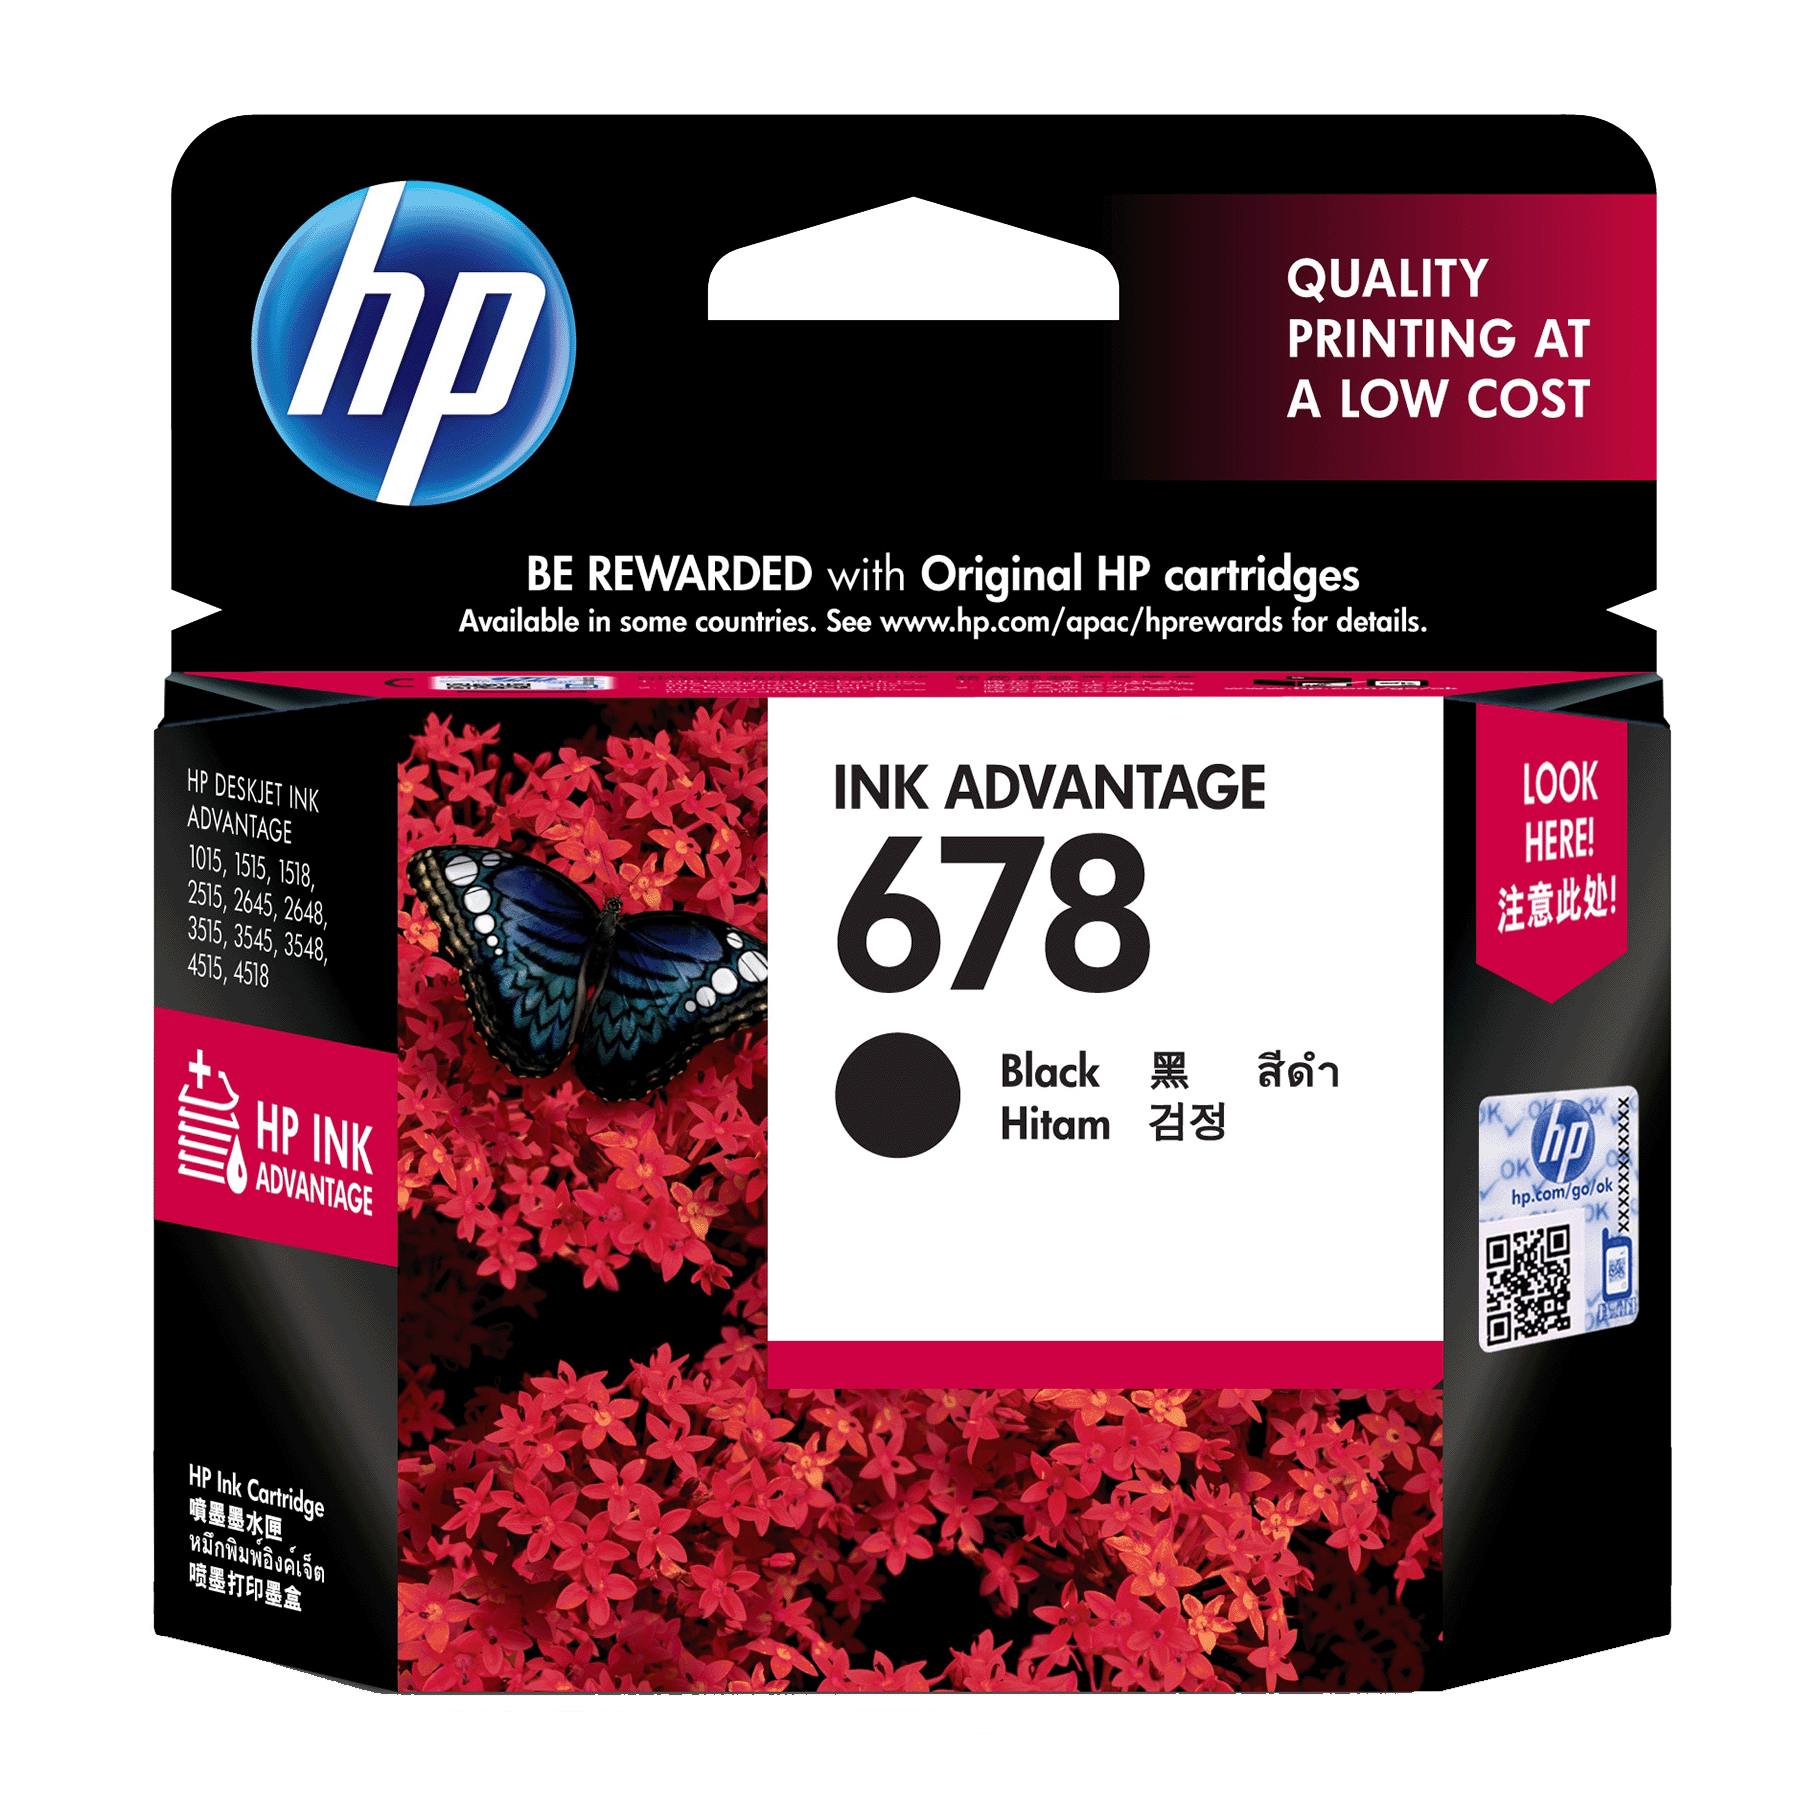 HP 678 Original Ink Advantage Cartridge (CZ107AA, Black)_1